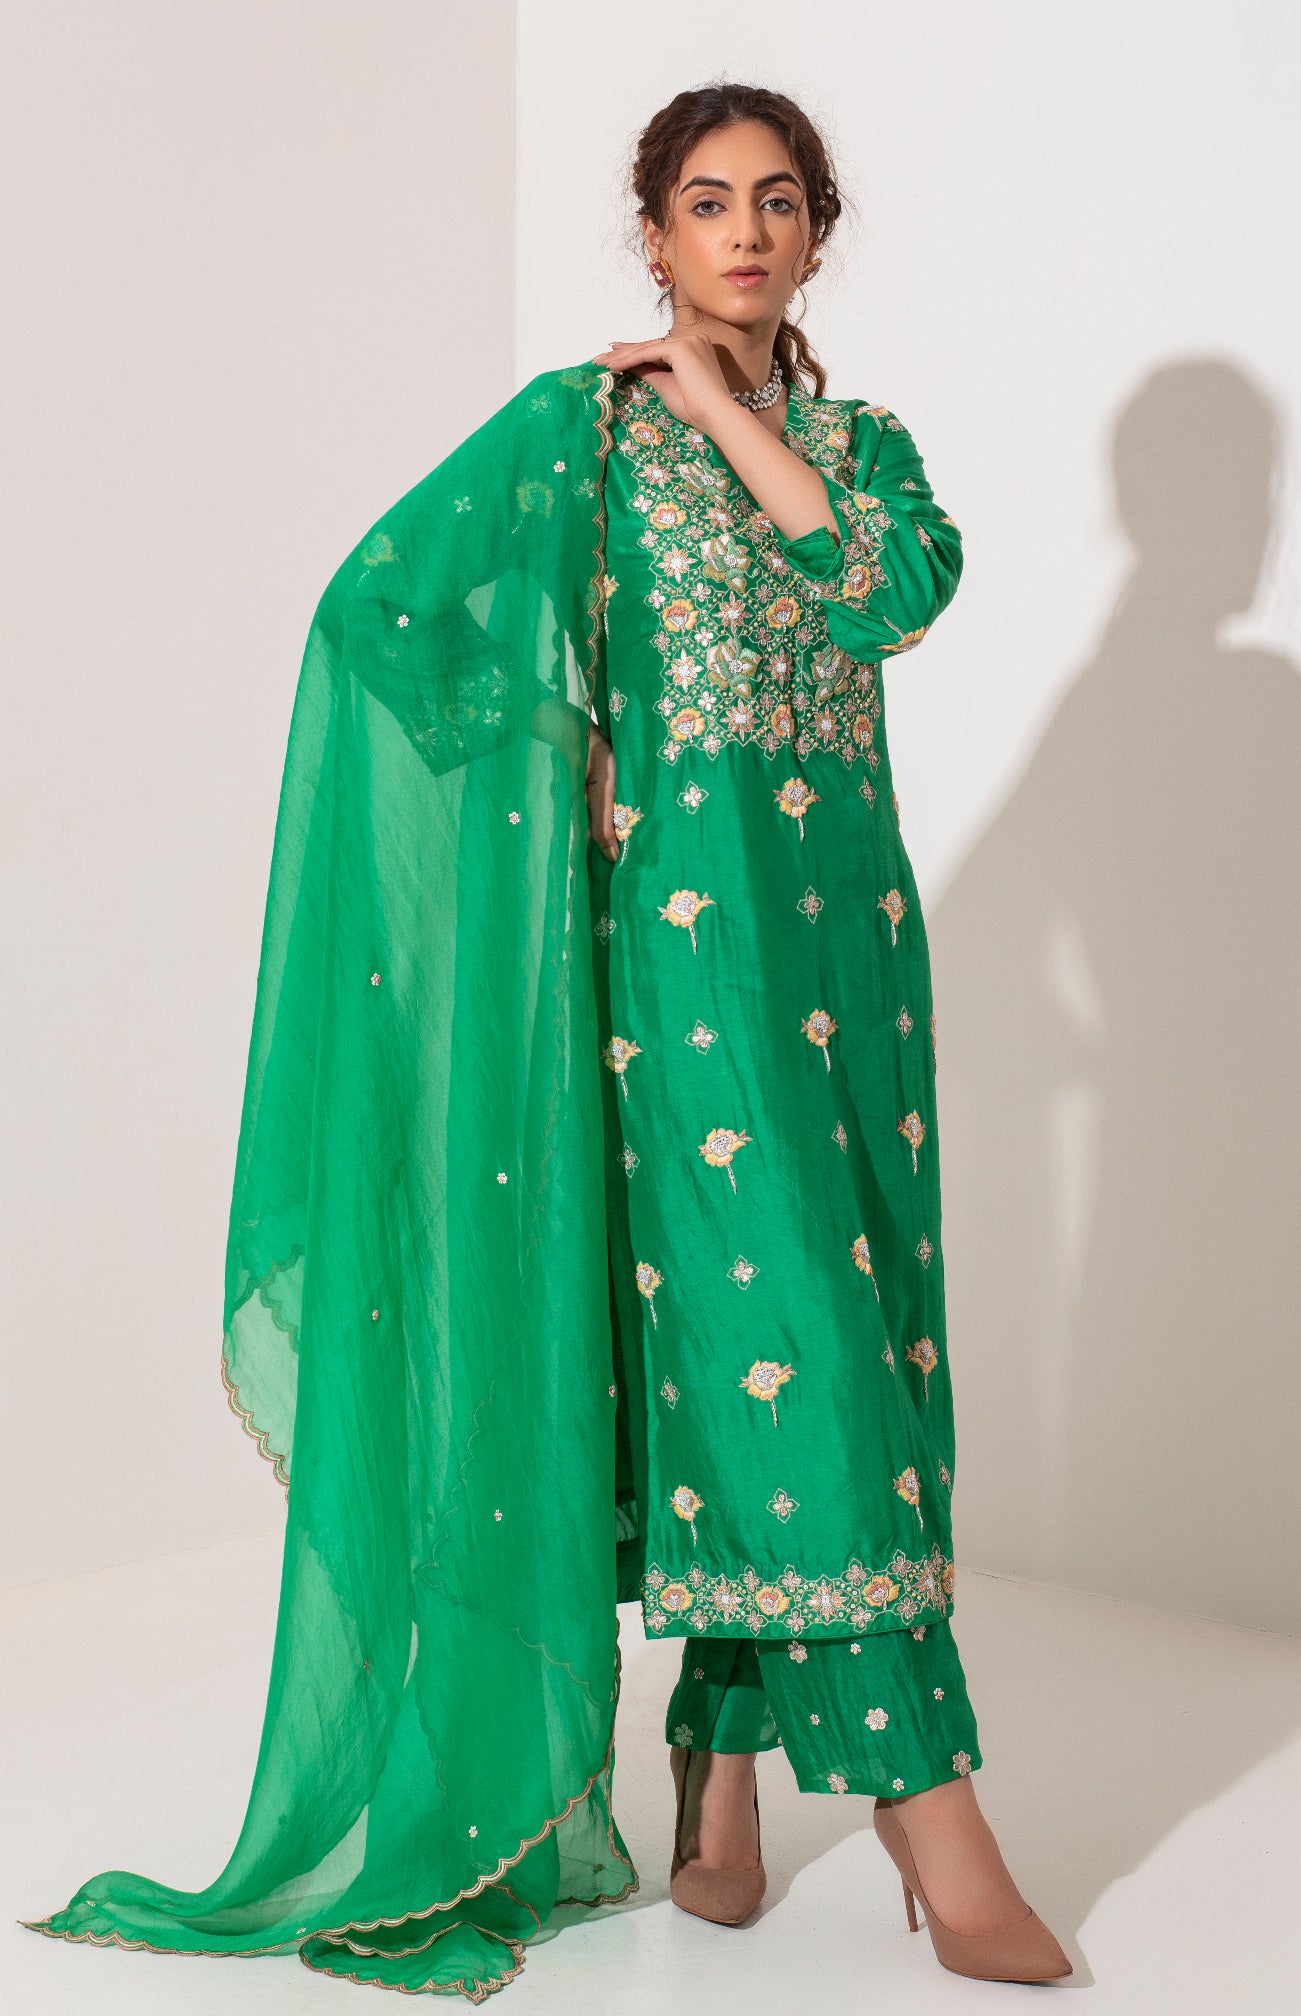 Parrot green Resham and zardozi embroidered kurta pants and dupatta set